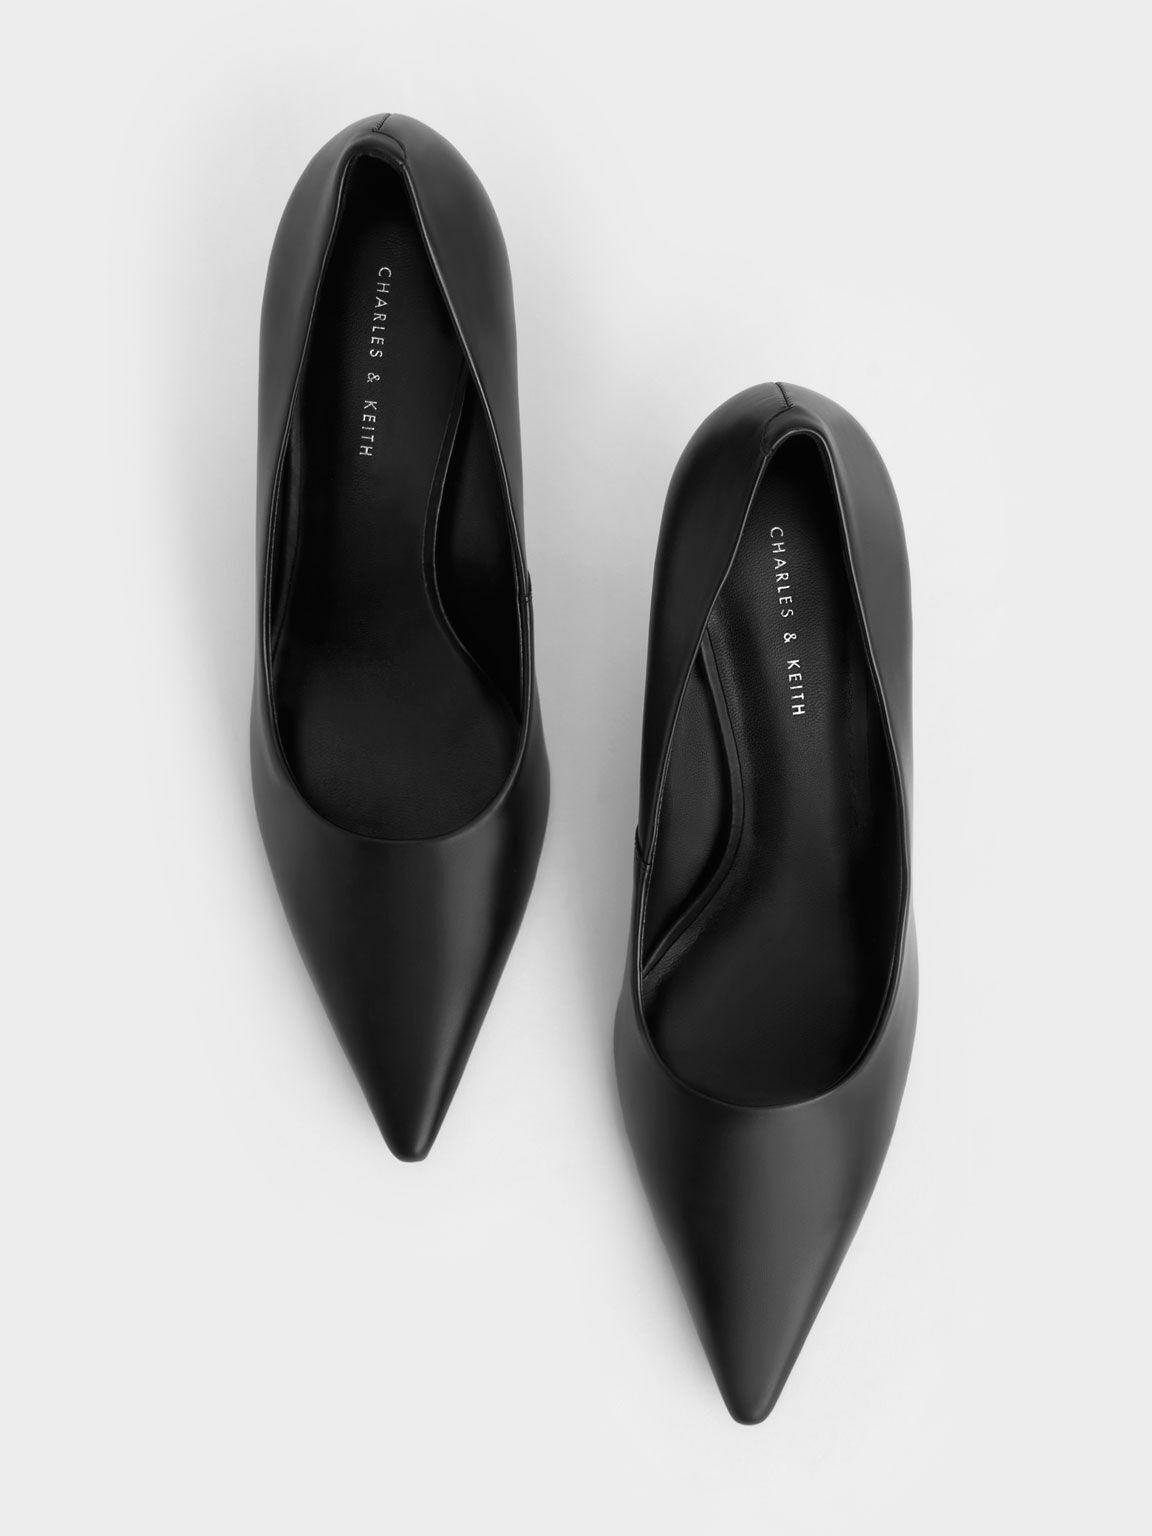 Sepatu Pumps Sculptural Heel Pointed-Toe, Black, hi-res